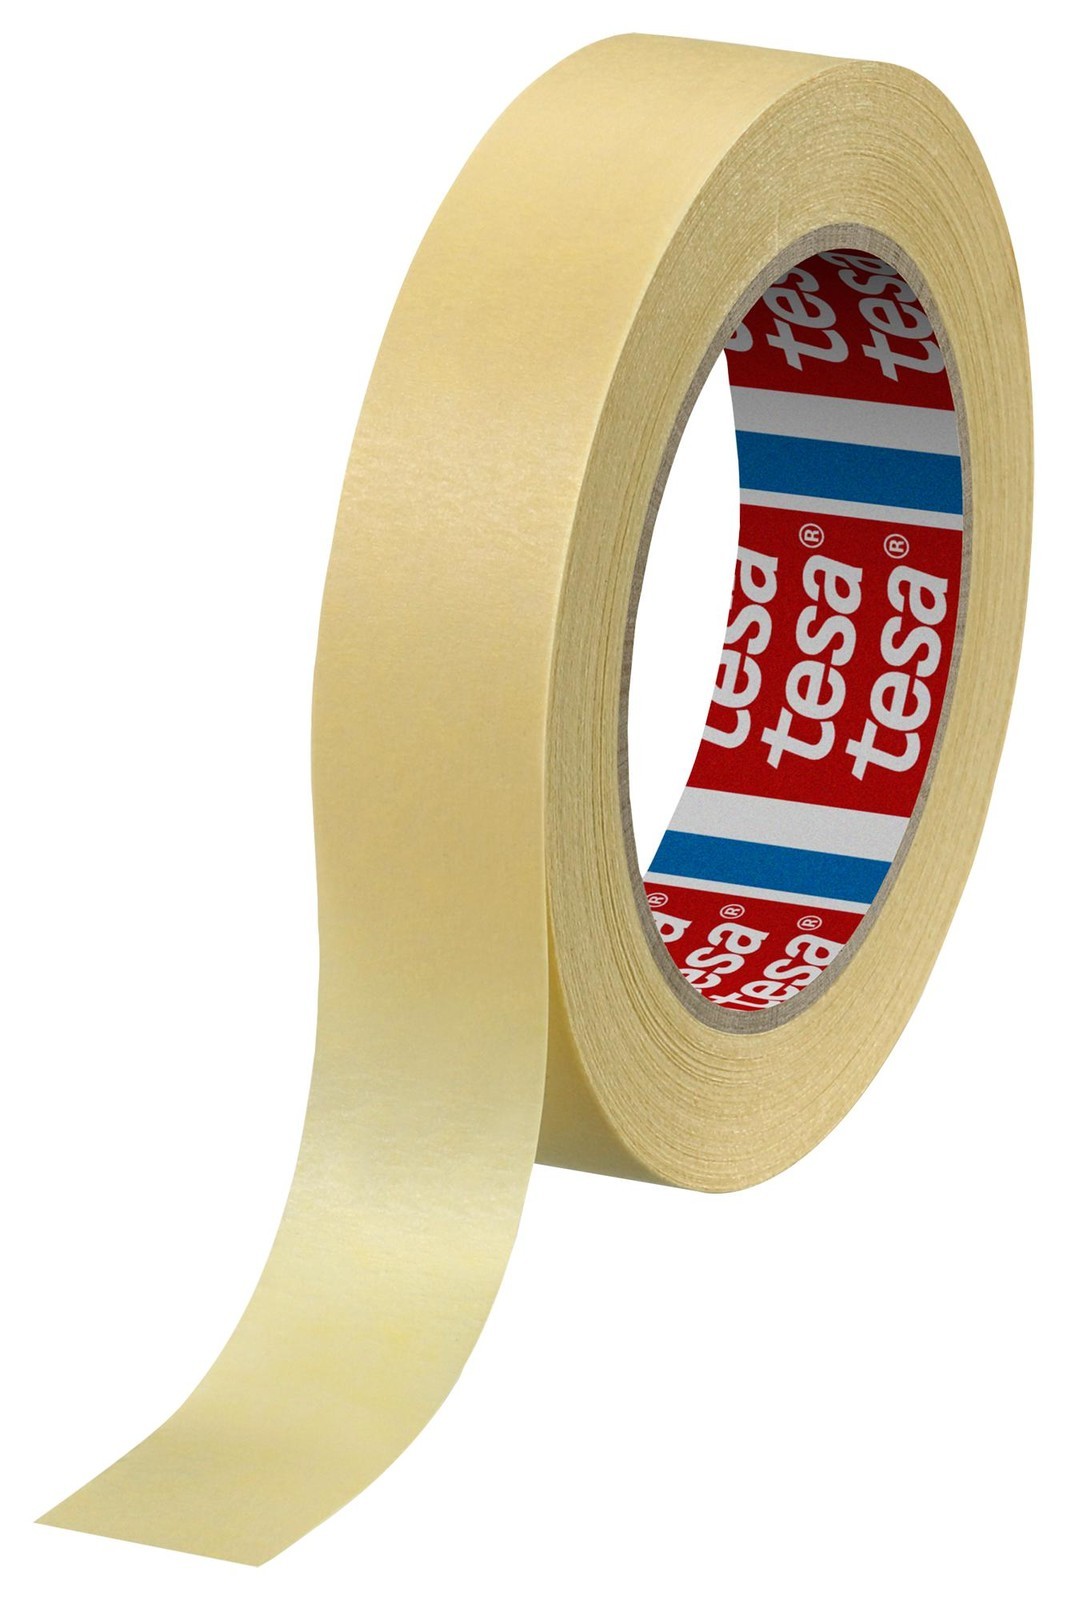 Tesa 04323-00008-00 Masking Tape, Crepe Paper, 50M X 25mm